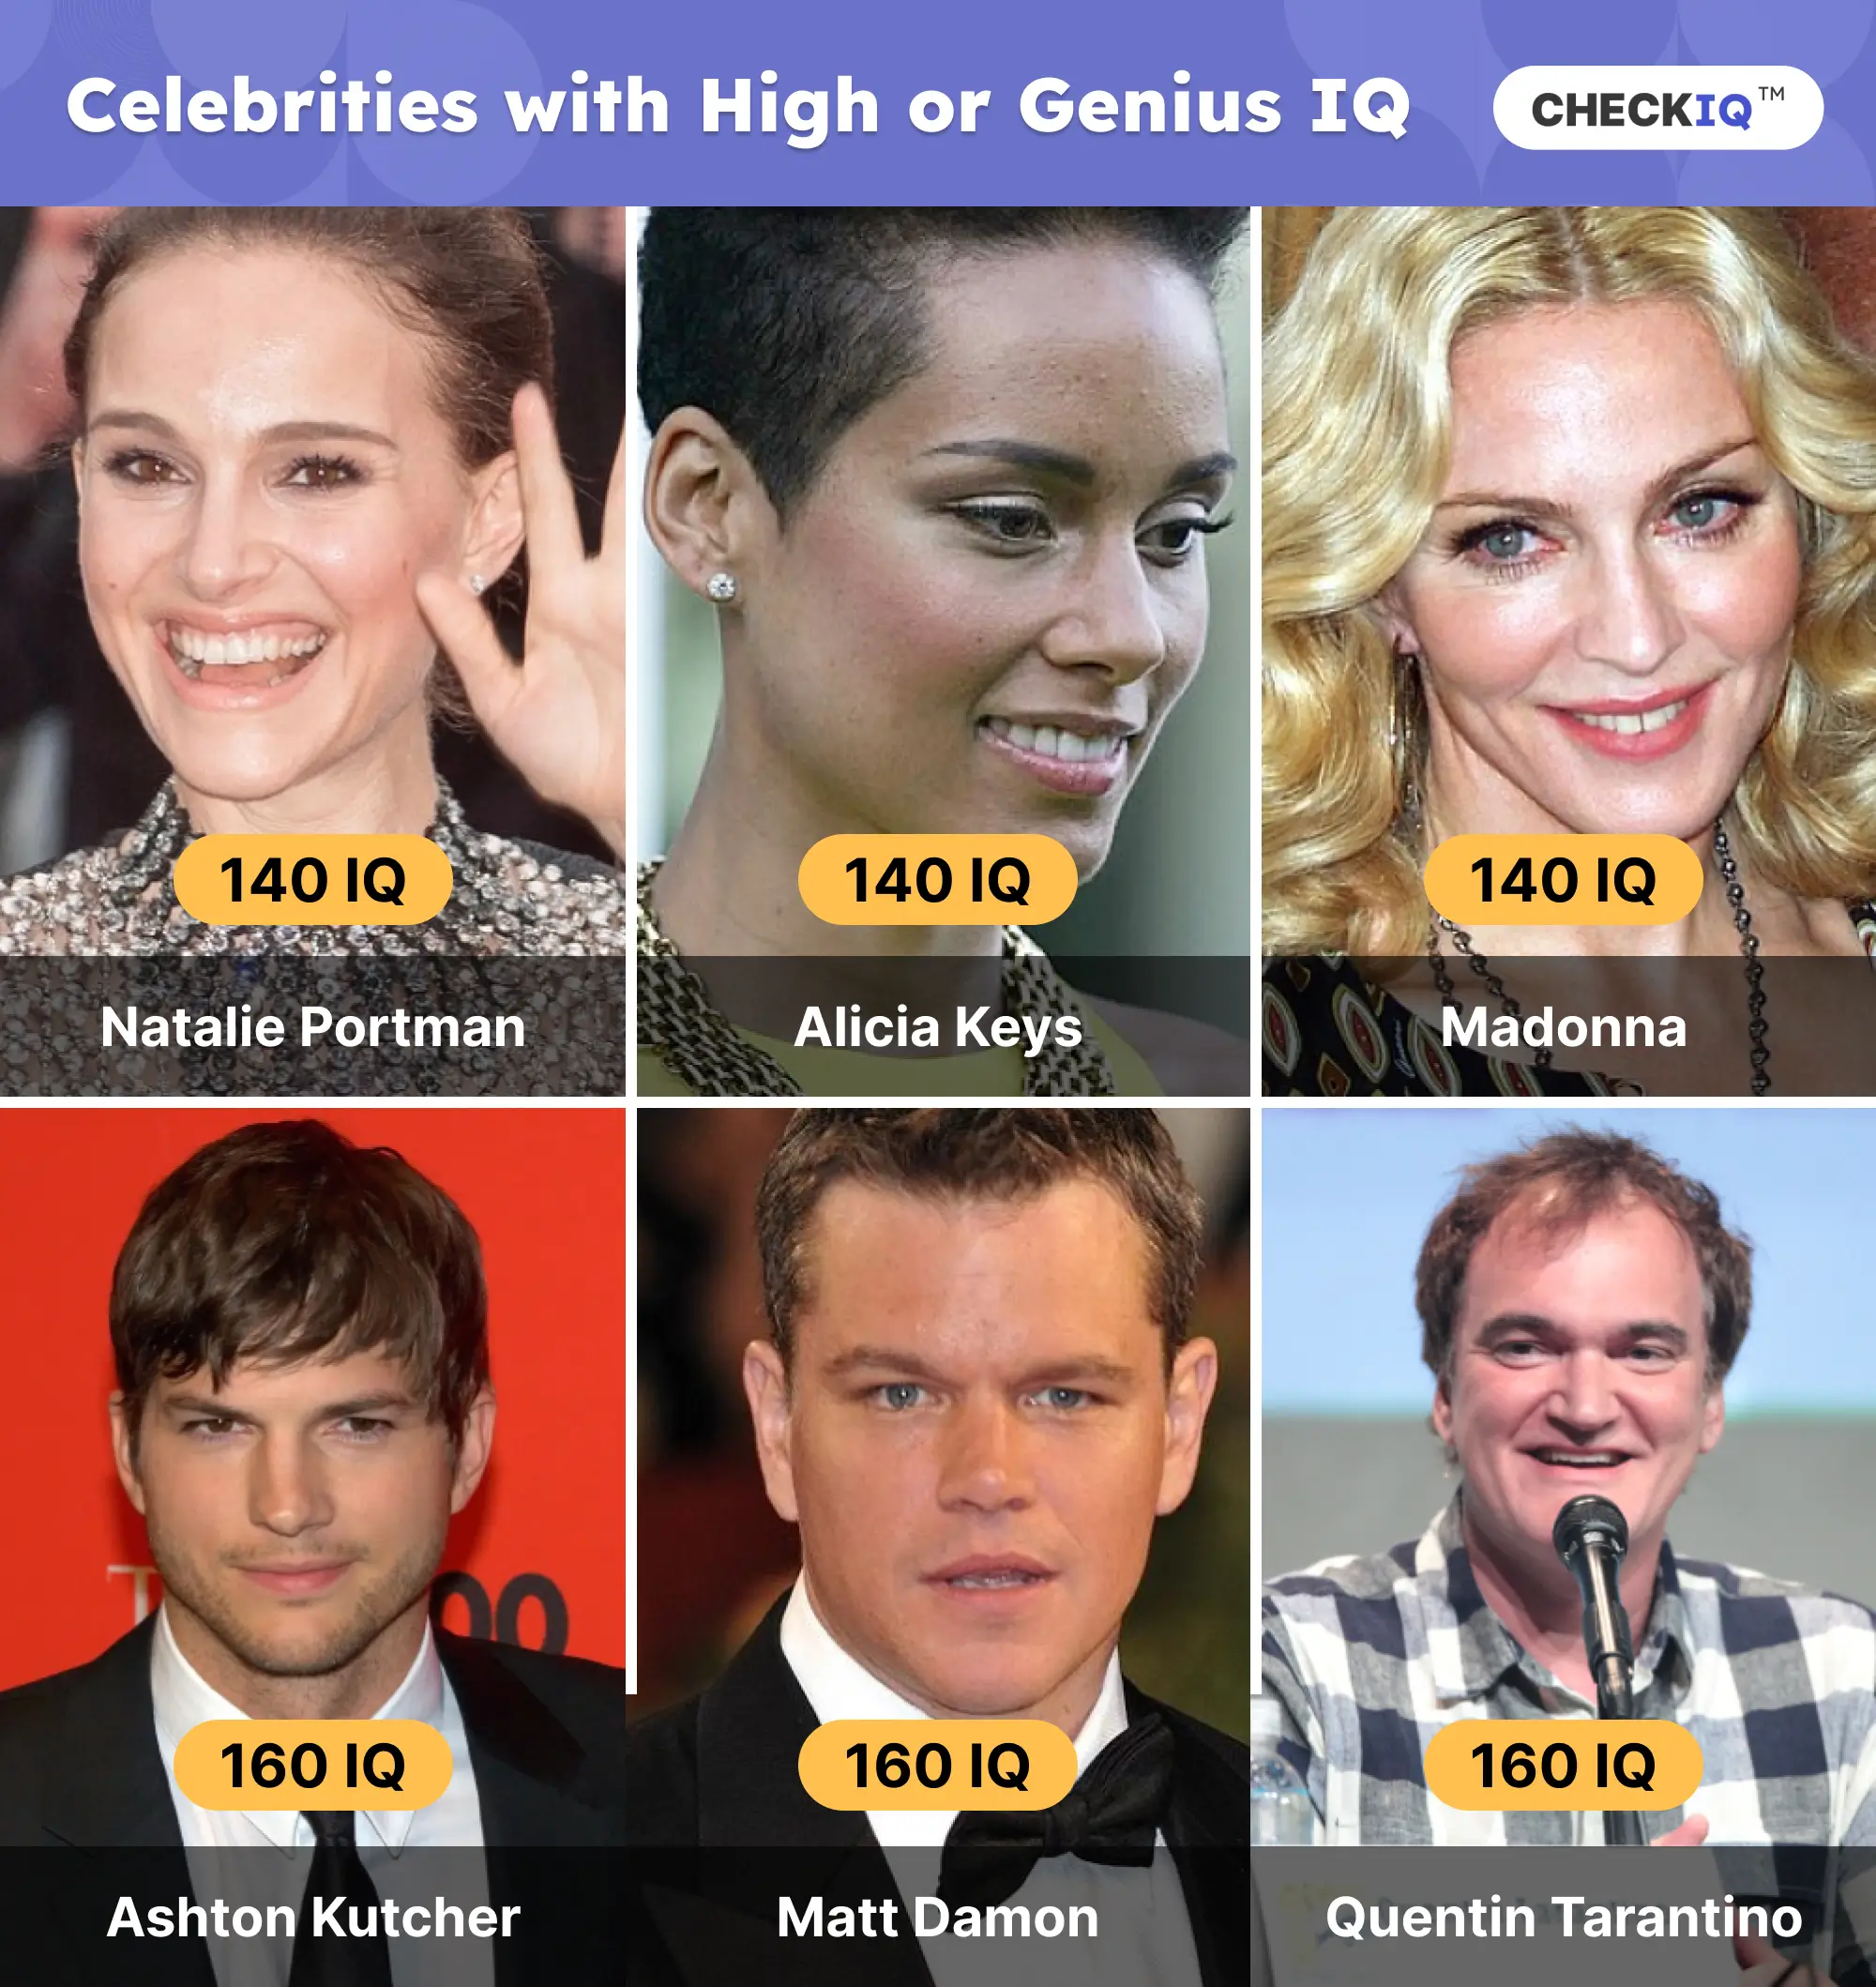 Celebrities with genius IQ: Natalie Portman, Alicia Keys, Madonna, Ashton Kutcher, Matt Damon, and Quentin Tarantino